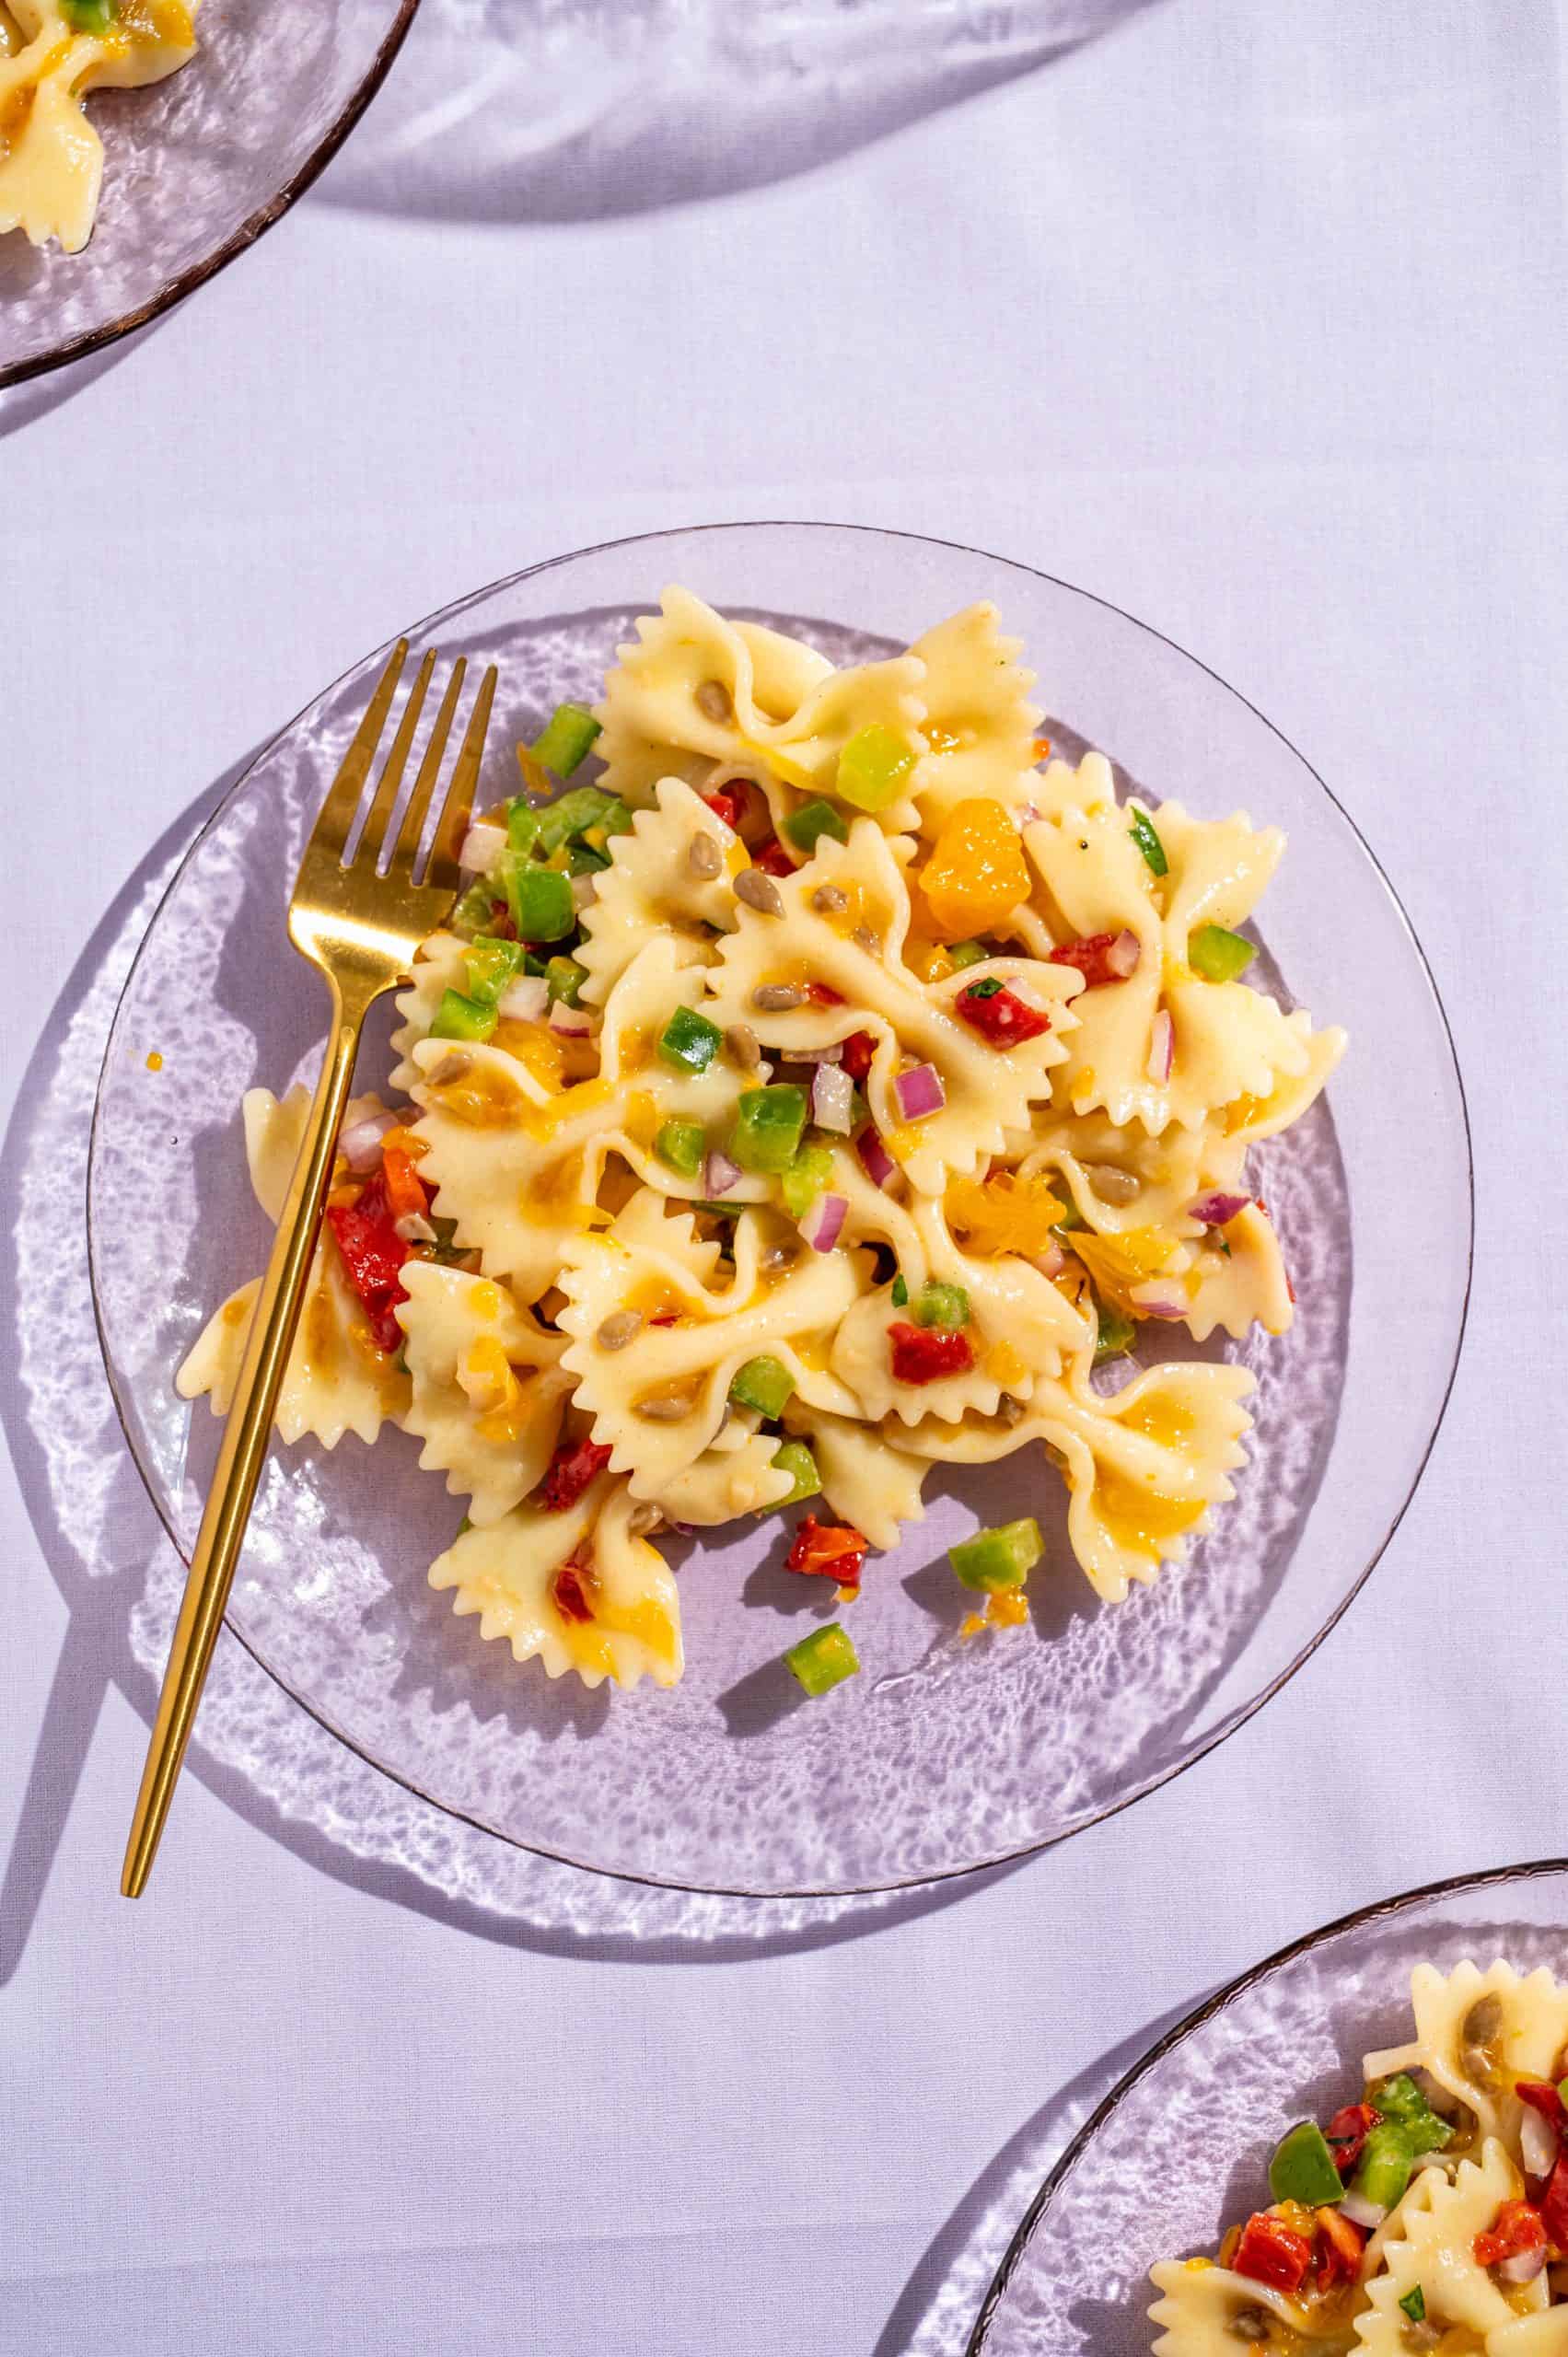 Honey pasta salad on a glass plate set on a light purple tablecloth